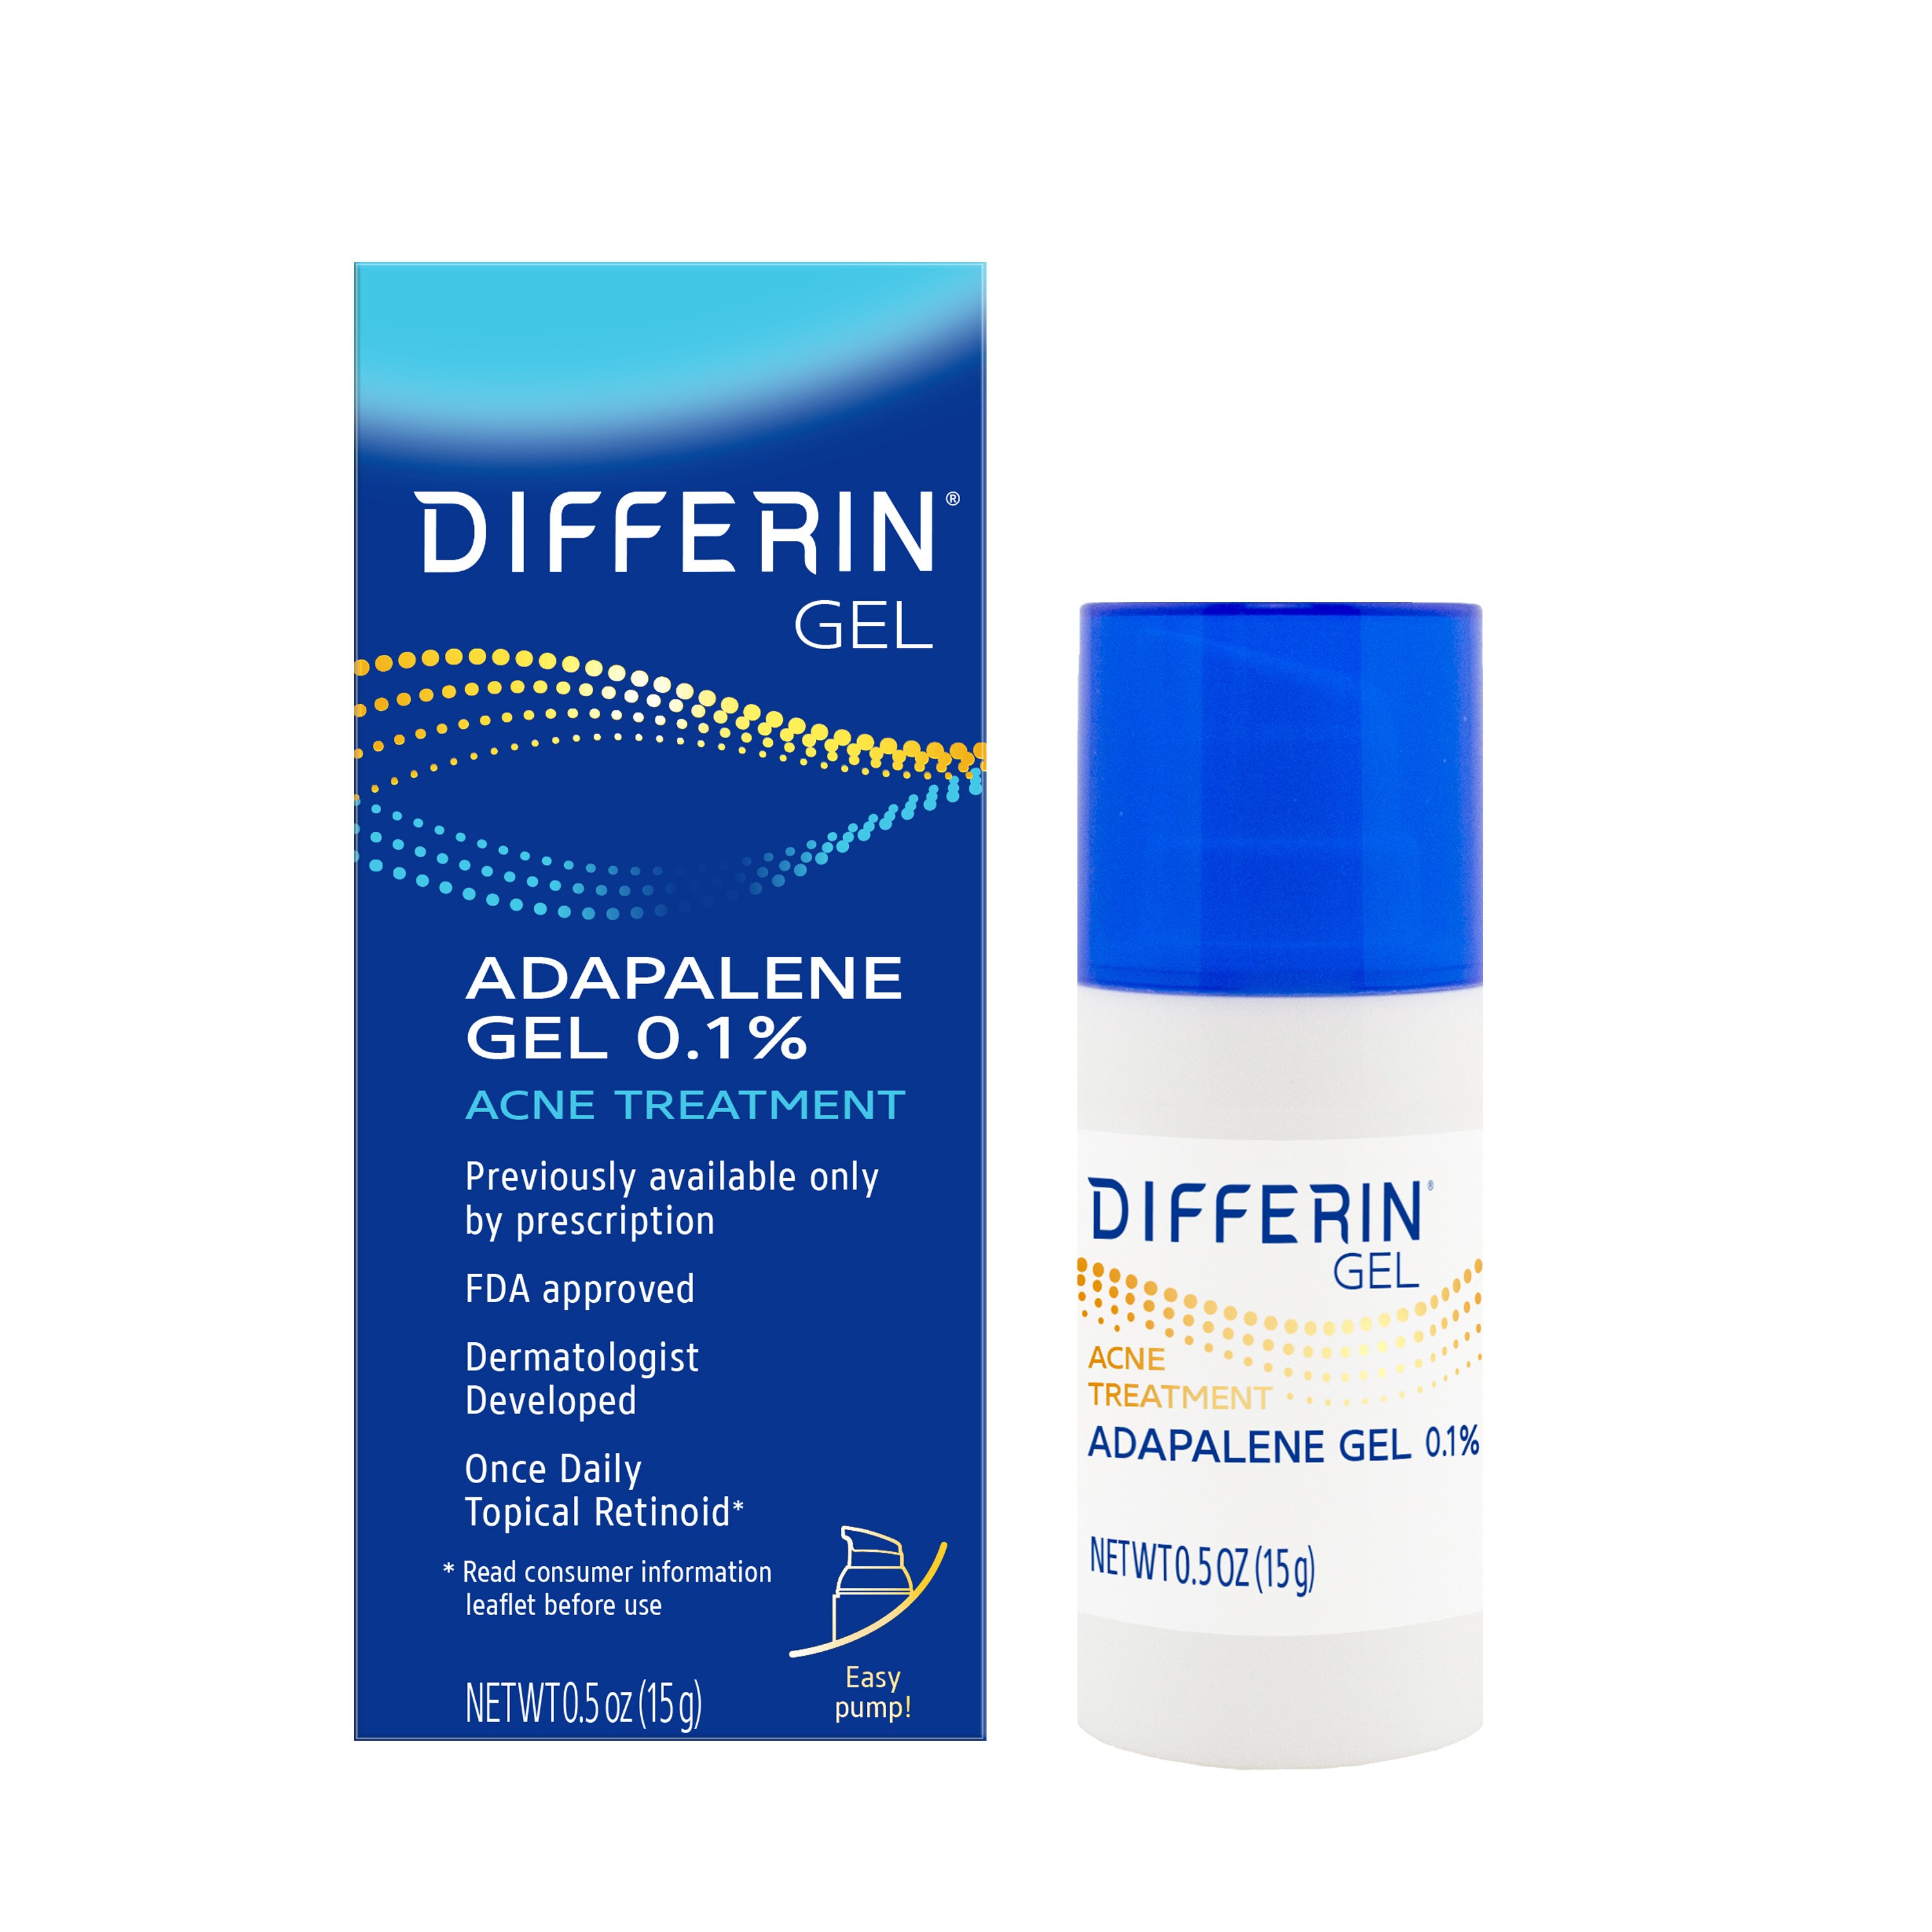 Differin .1% Adapalene Treatment Gel Pump